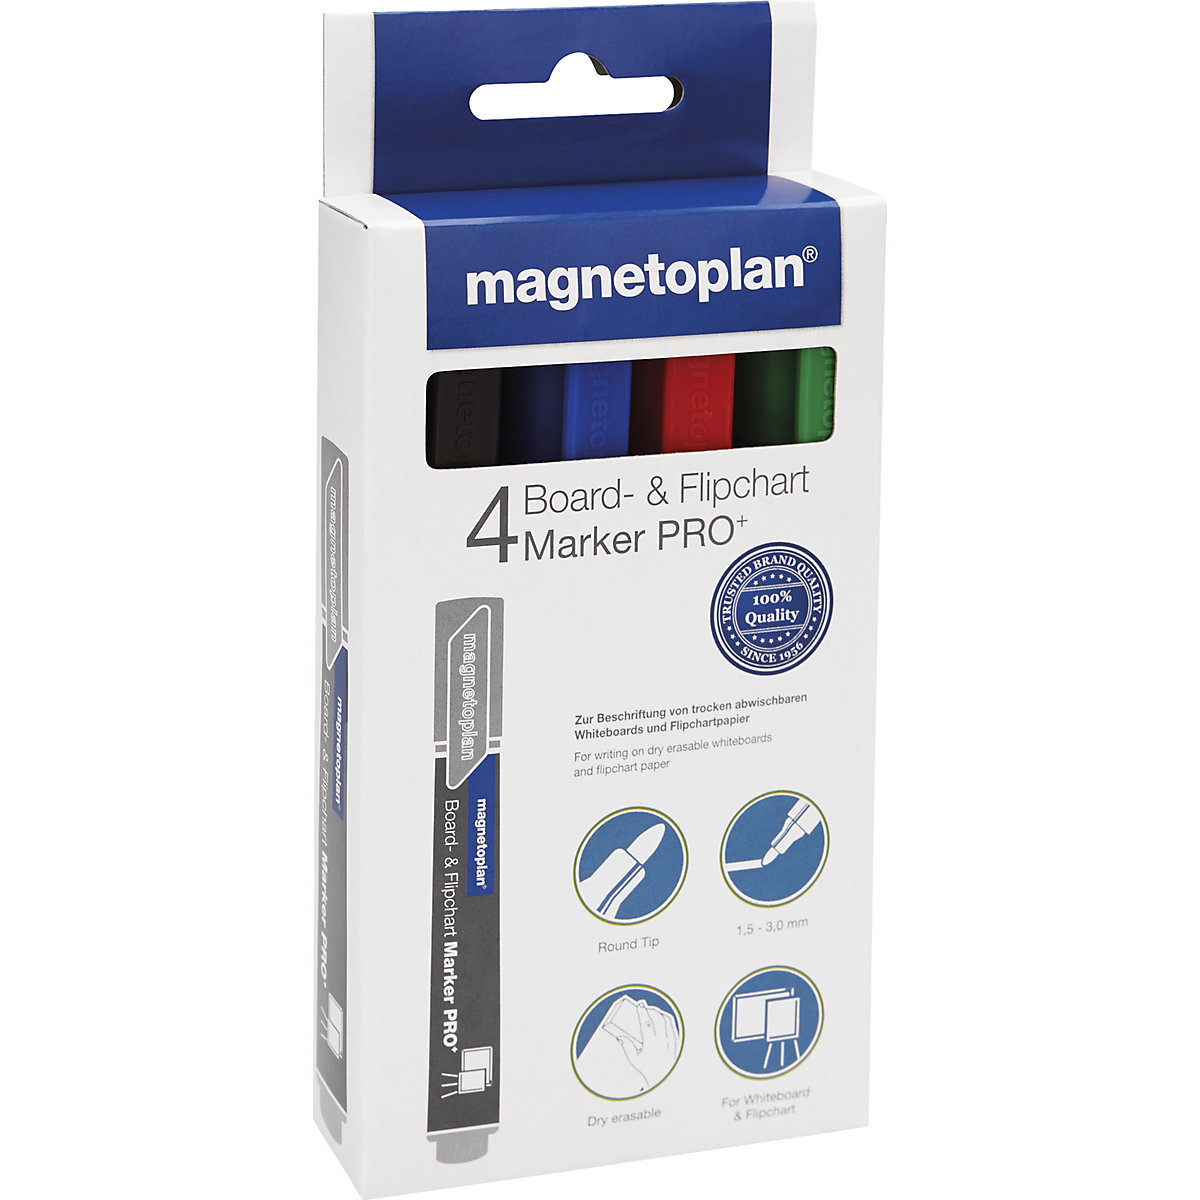 Board markere și markere pentru flipchart, sortate – magnetoplan (Imagine produs 4)-3